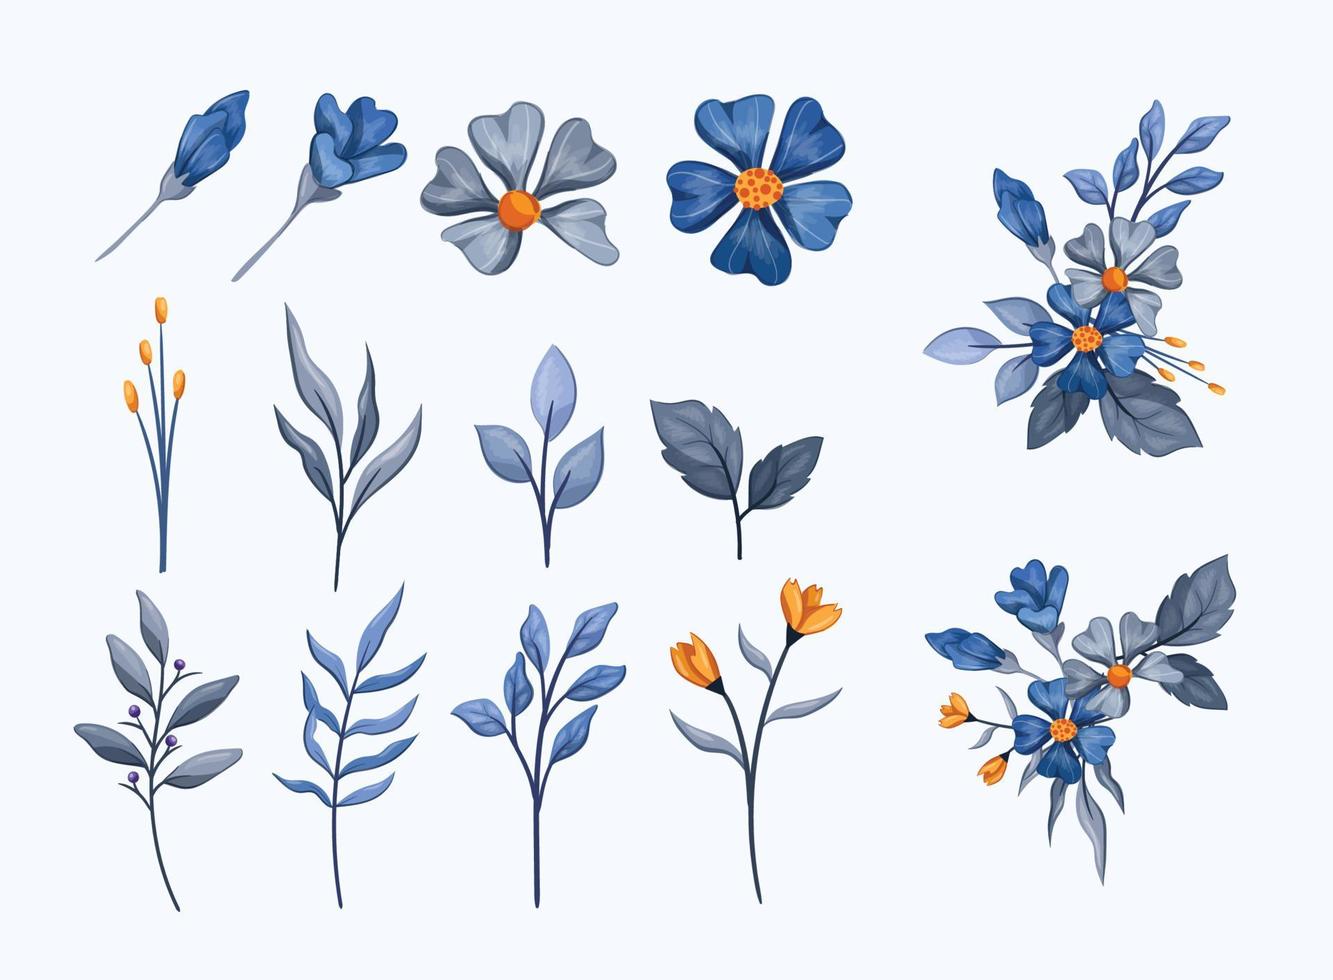 Aquarell Blau Blätter und Blumen vektor